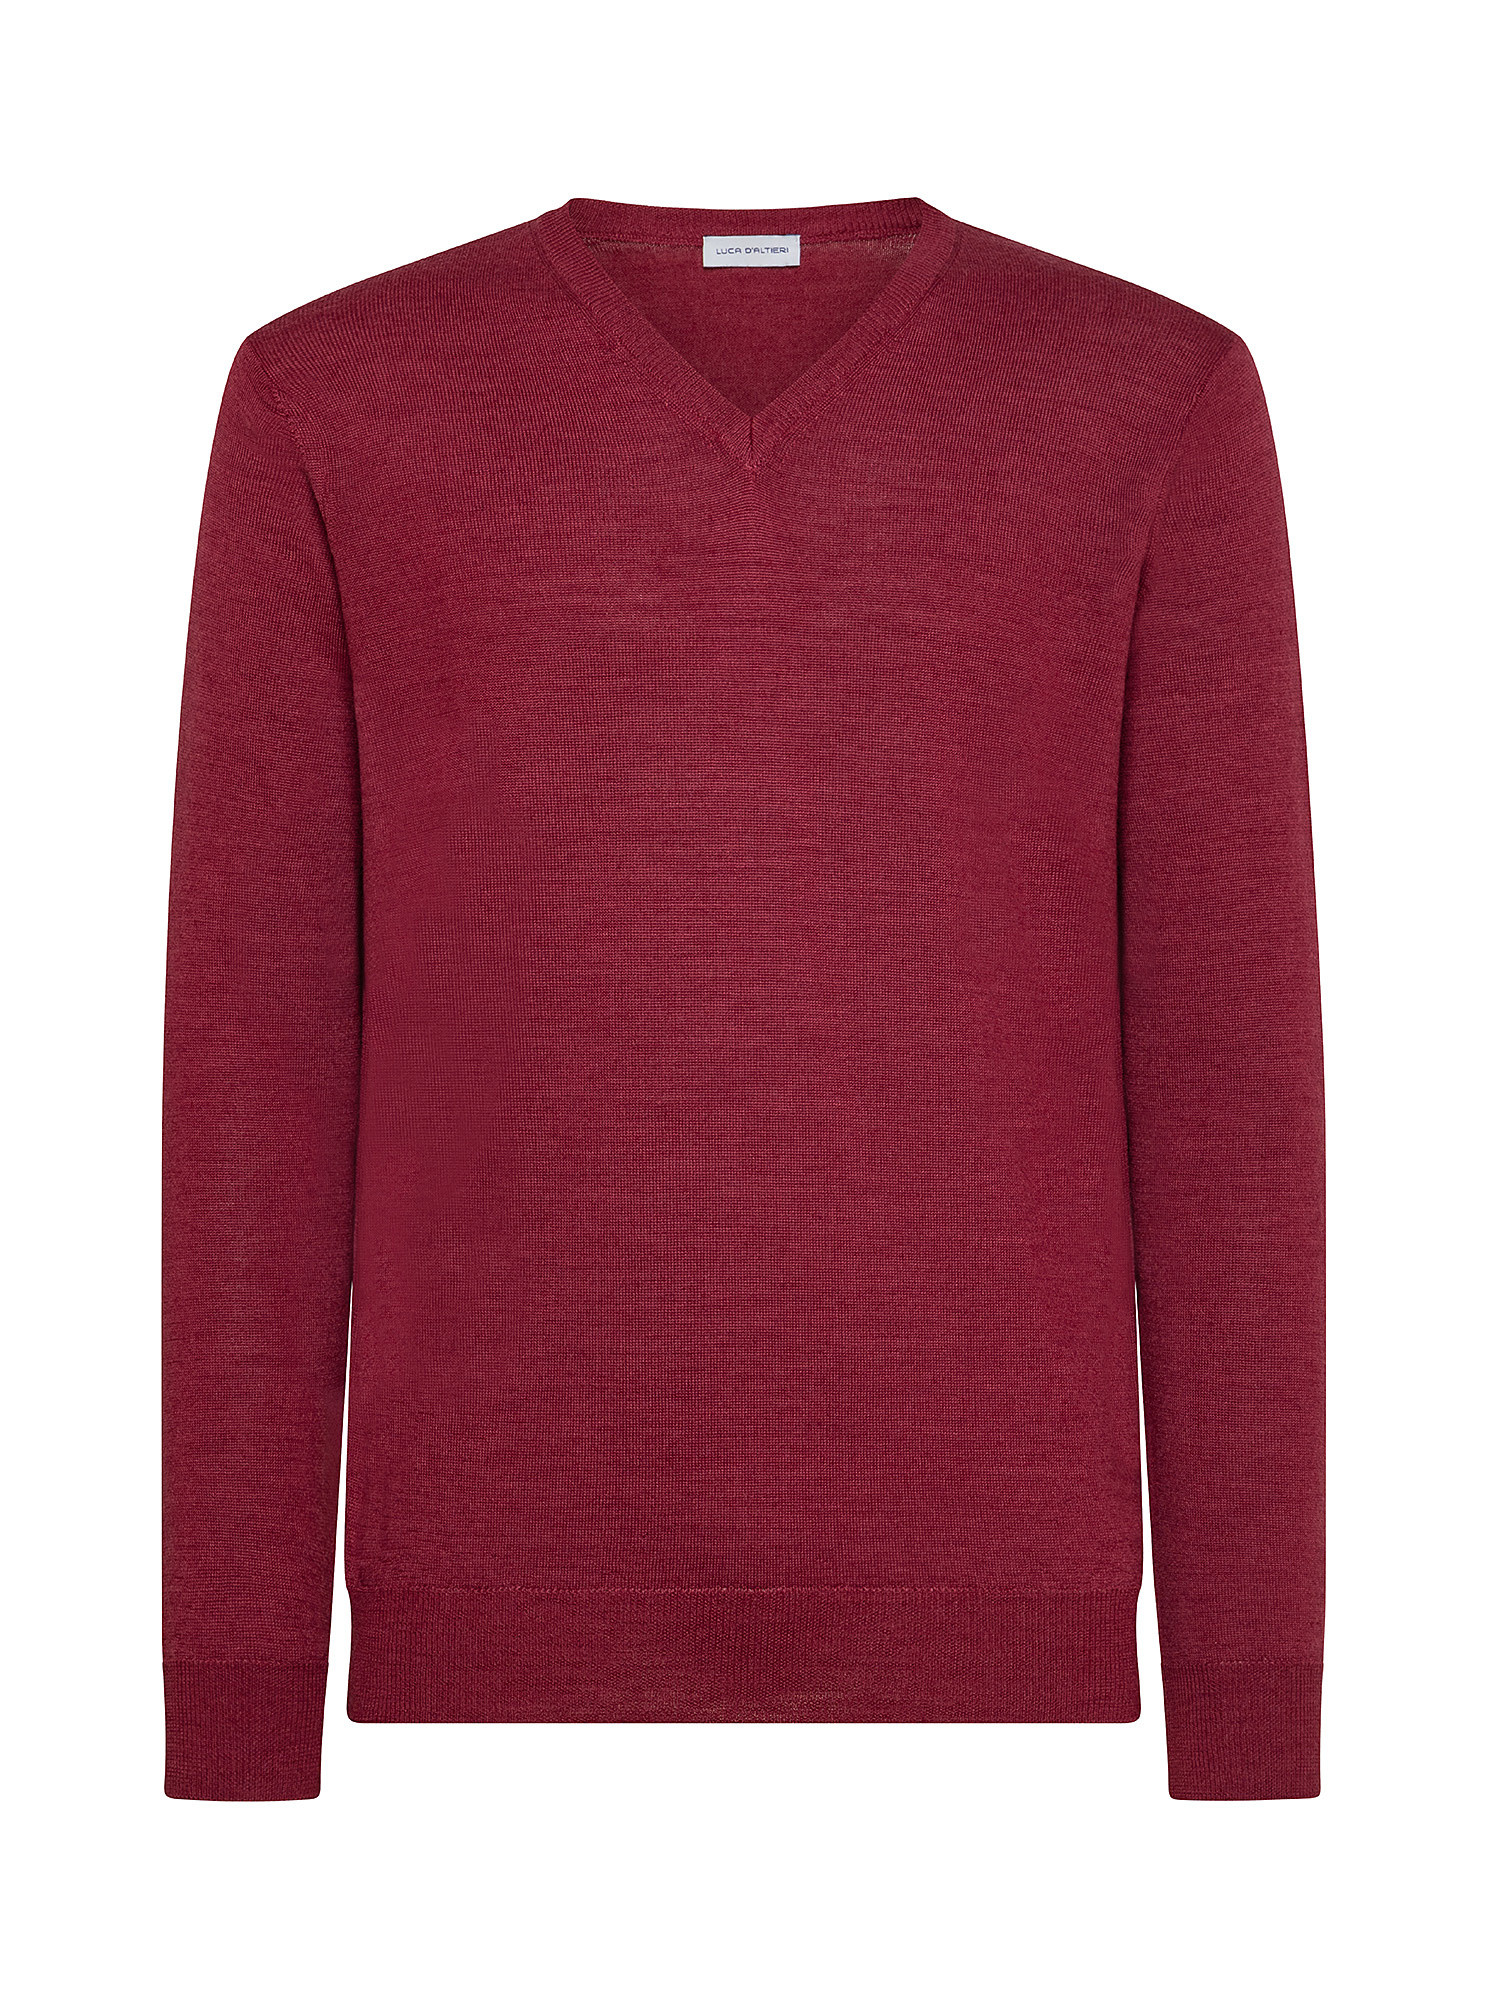 Merino Blend V-neck sweater - Machine washable, Red Bordeaux, large image number 0